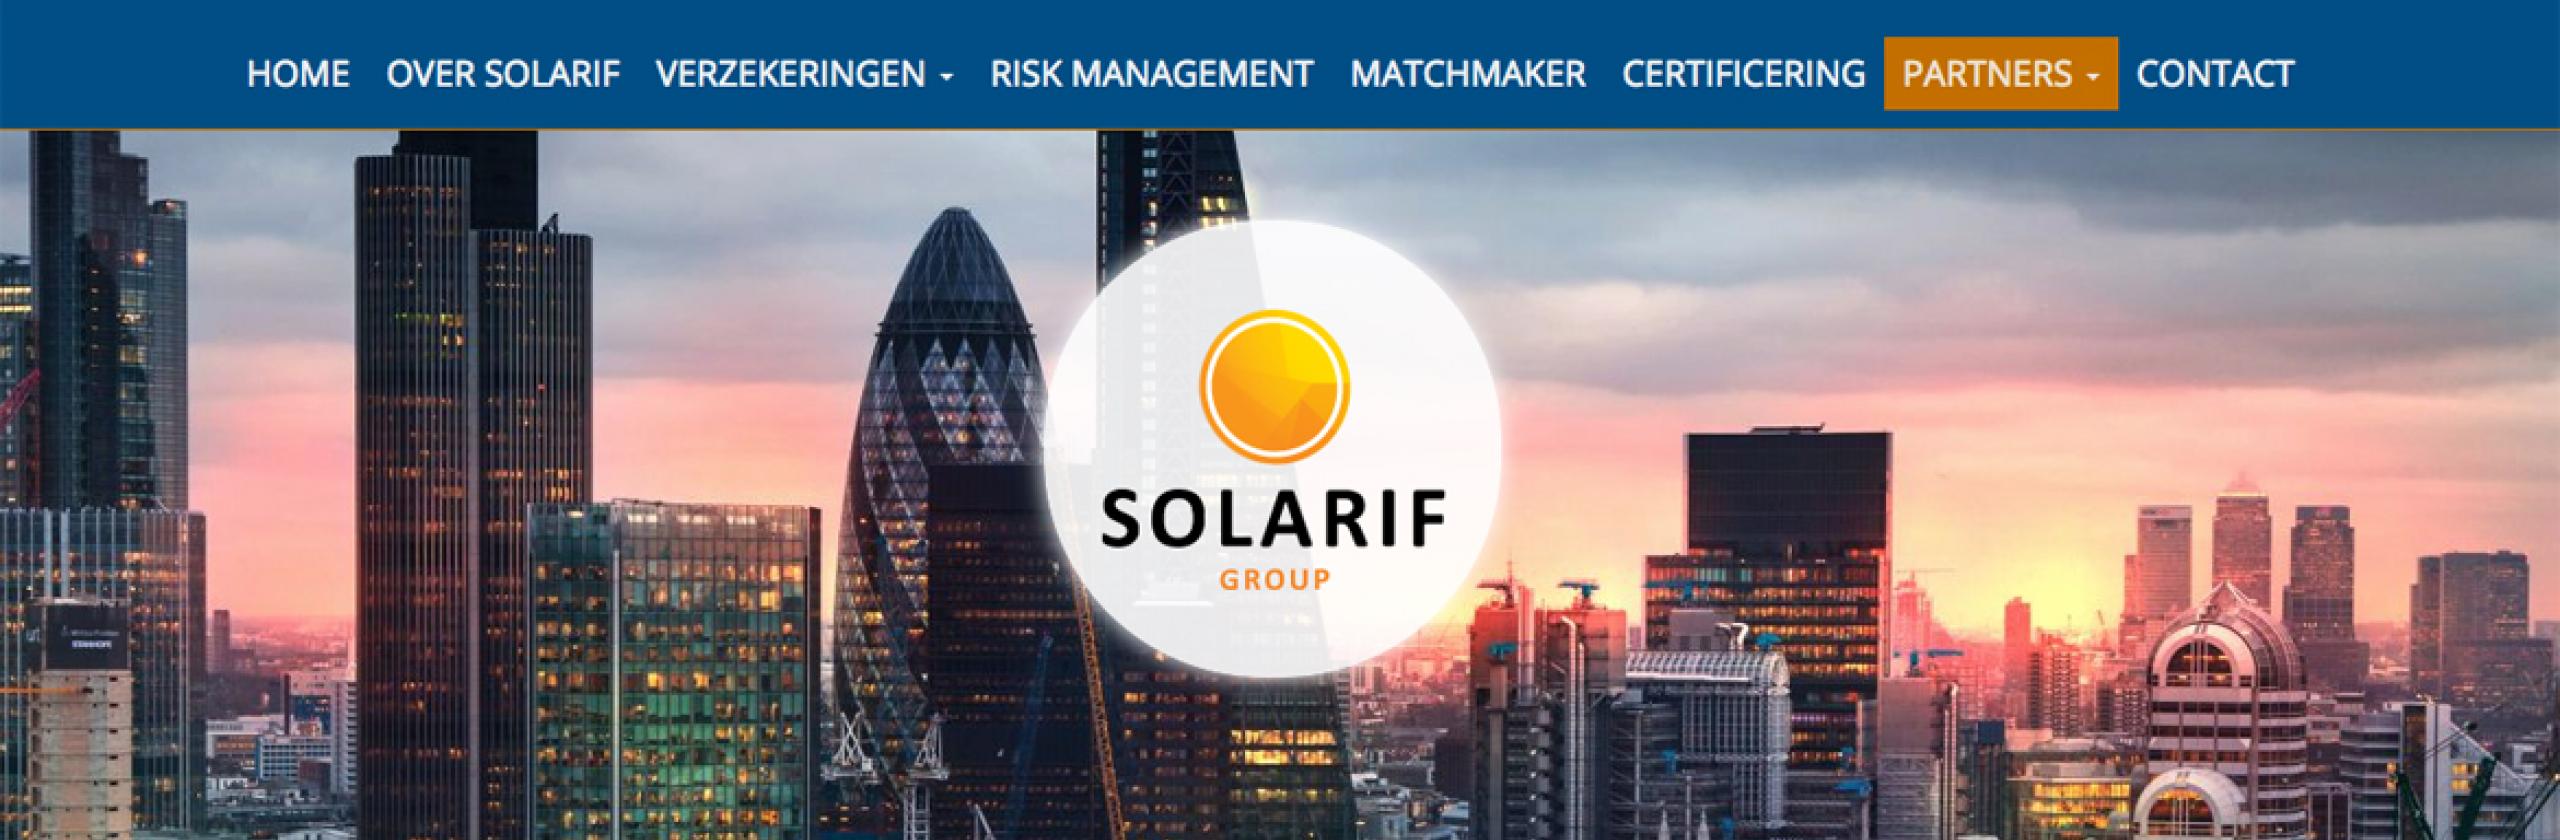 Header Solarif Group